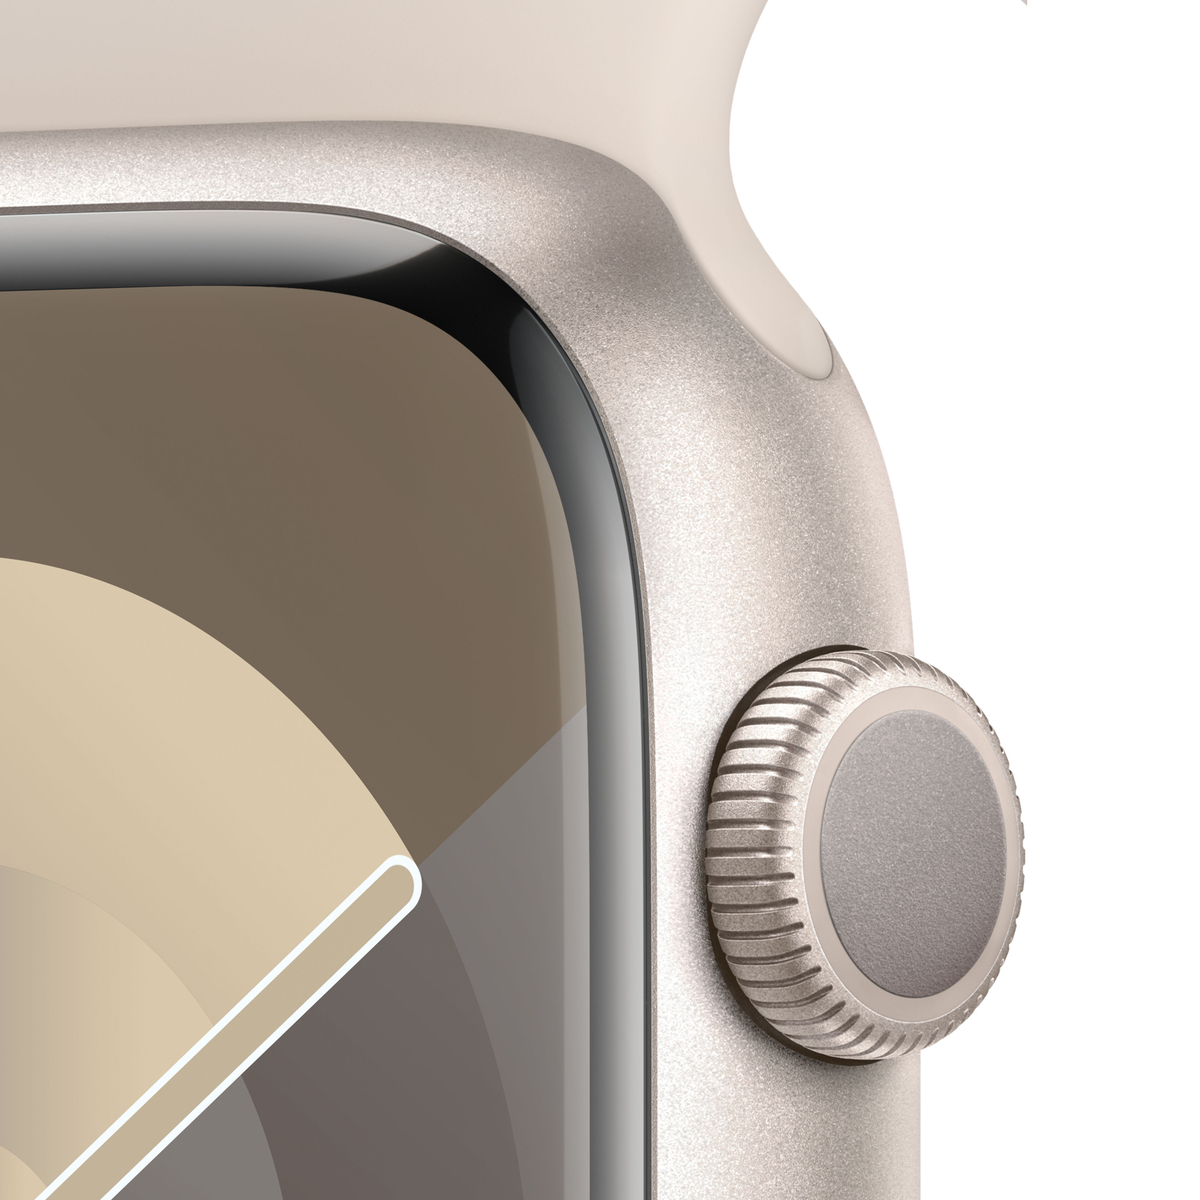 Apple Watch Series 9 GPS, Starlight Aluminium Case with Starlight Sport Band, 41 mm, S/M, MR8T3QA/A